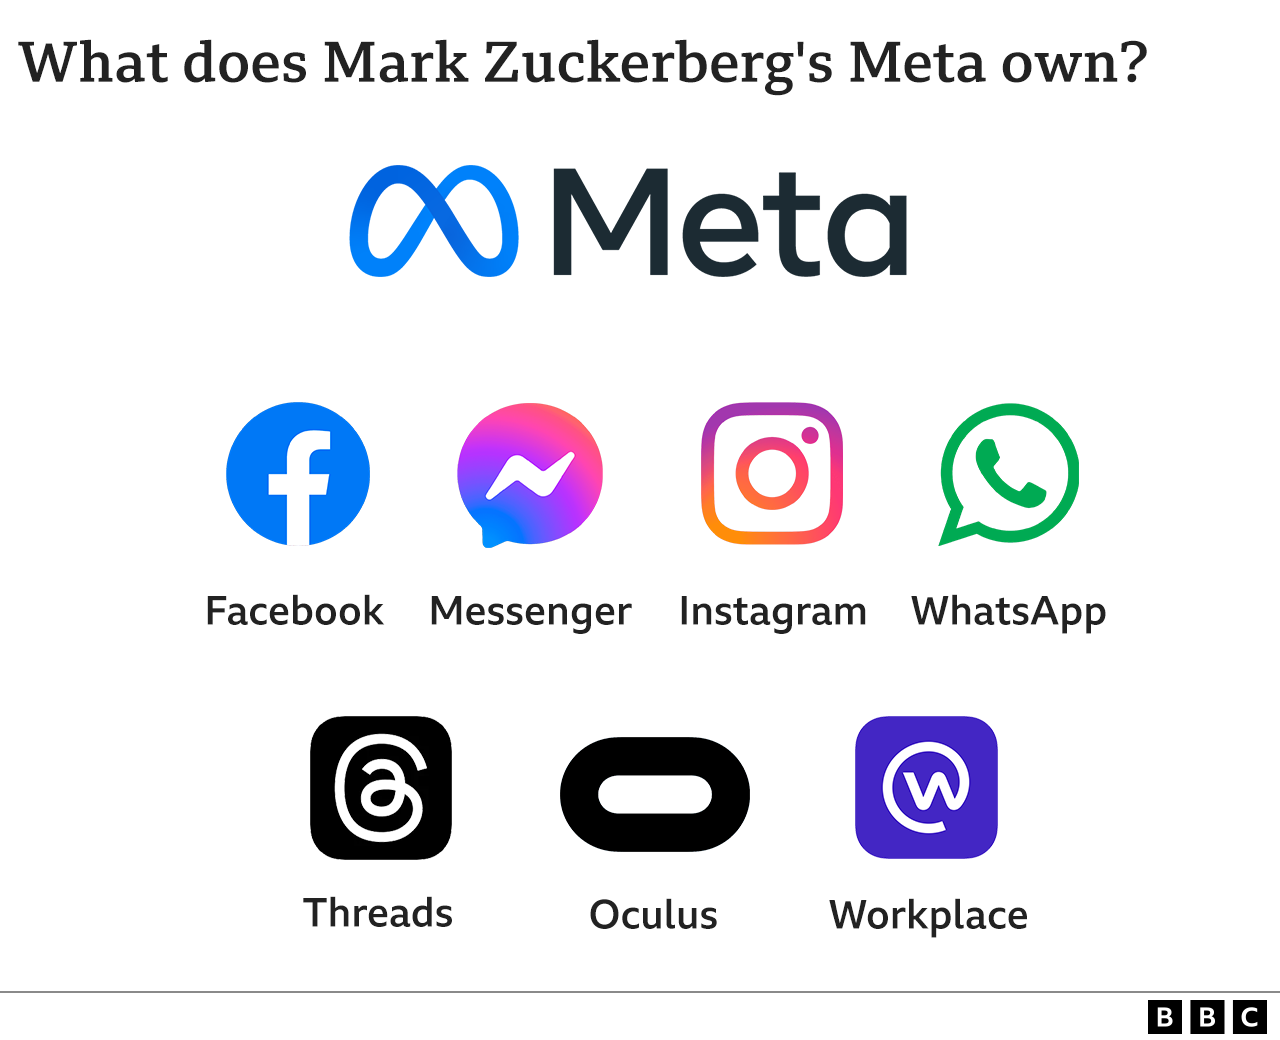 Графика, показывающая, что Meta Марка Цукерберга также владеет Facebook, Messenger, Instagram, Whatsapp, Threads, Oculus и Workplace